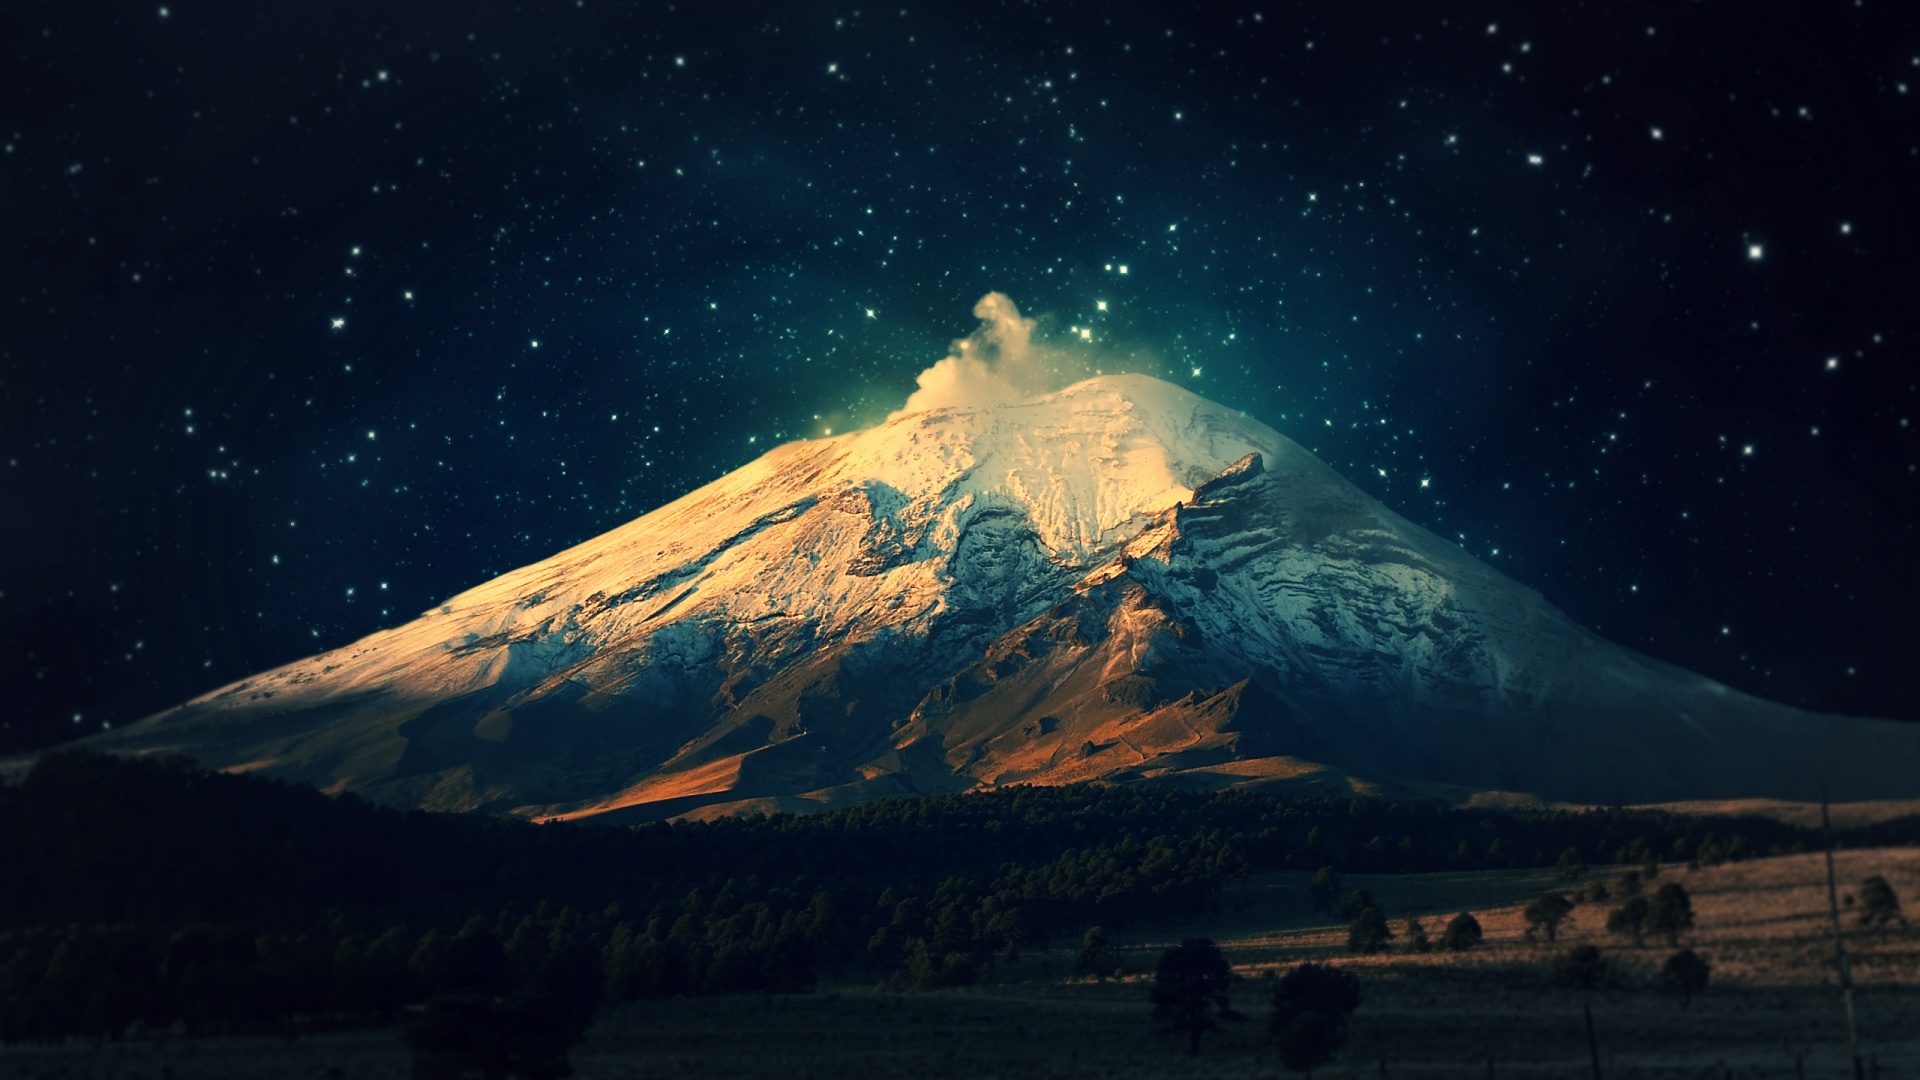 Pix Snowy Mountain Starry Sky Desktop Pc And Mac Wallpaper